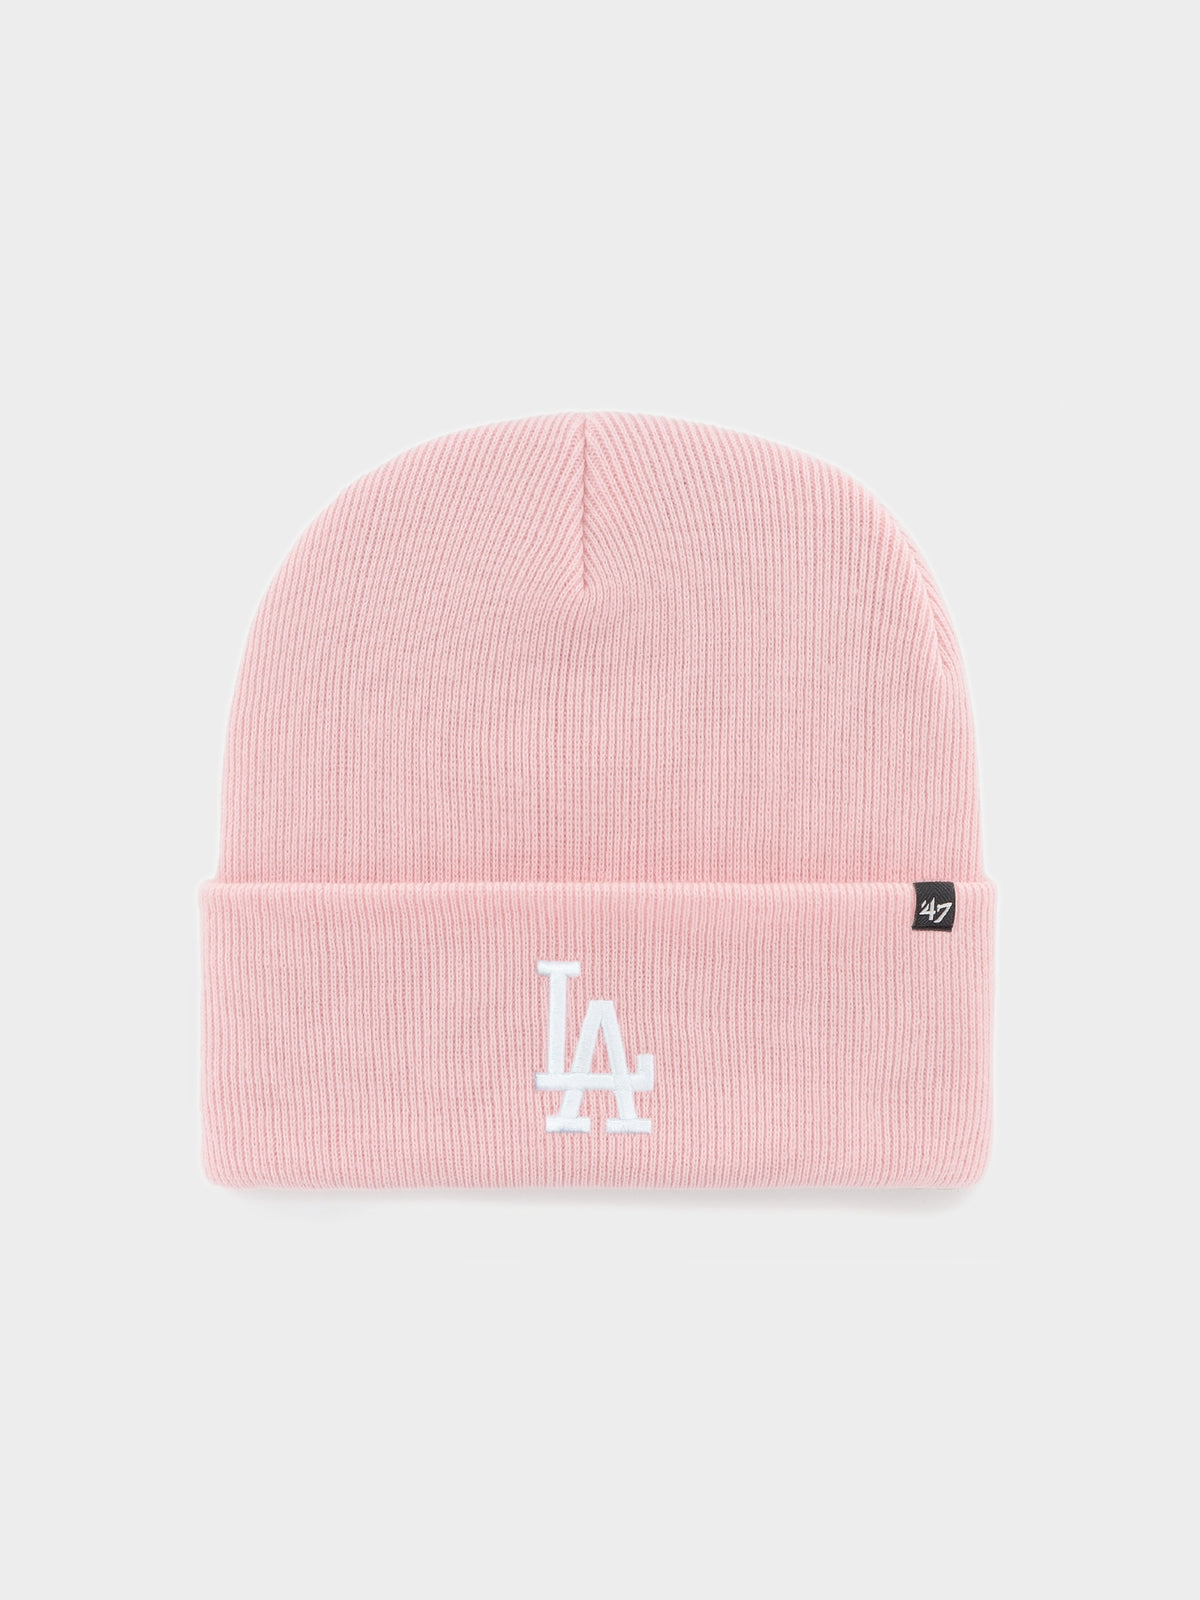 Haymaker LA Dodgers Beanie in Pink